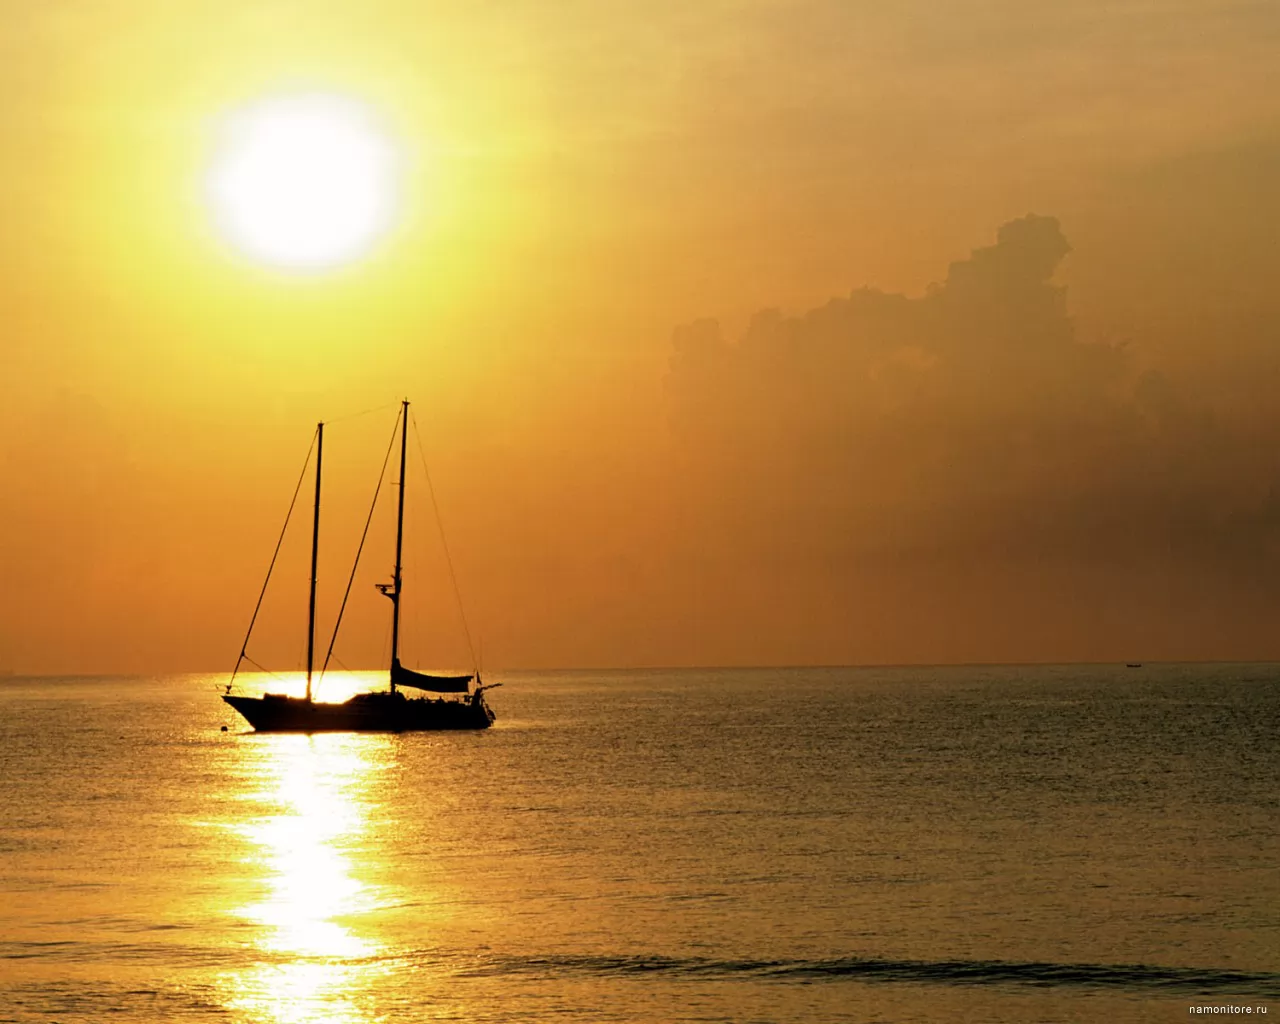 Gold sunset, golden, landscapes, nature, orange, sea, sunsets, yachts x